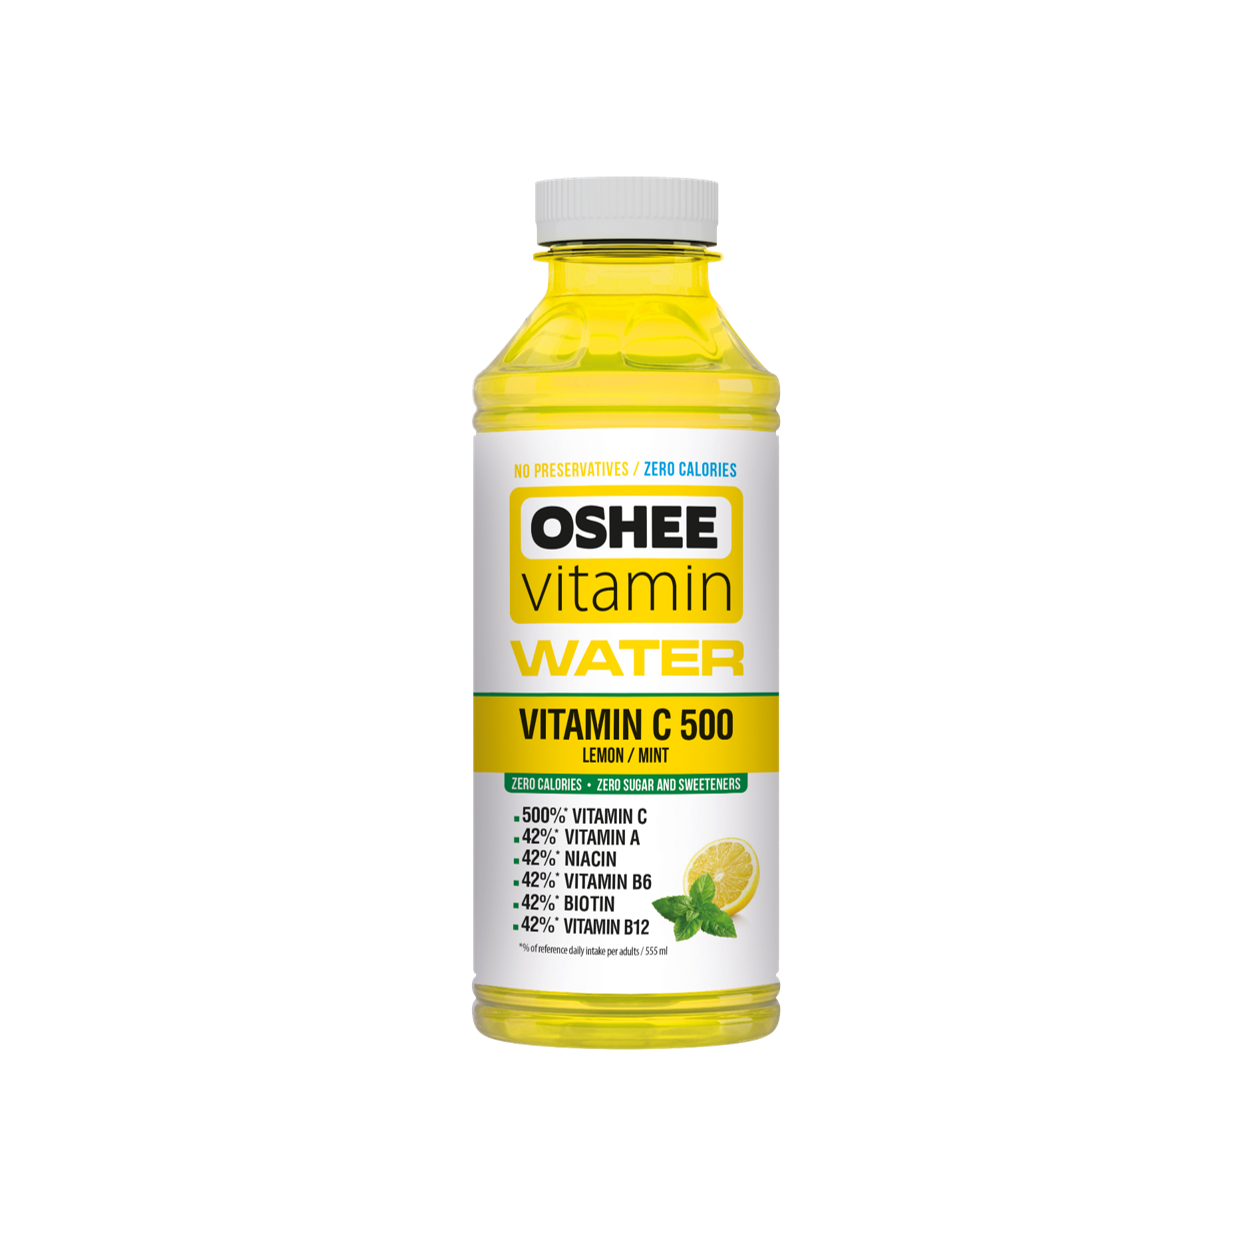 OSHEE vitamin water vitamin C